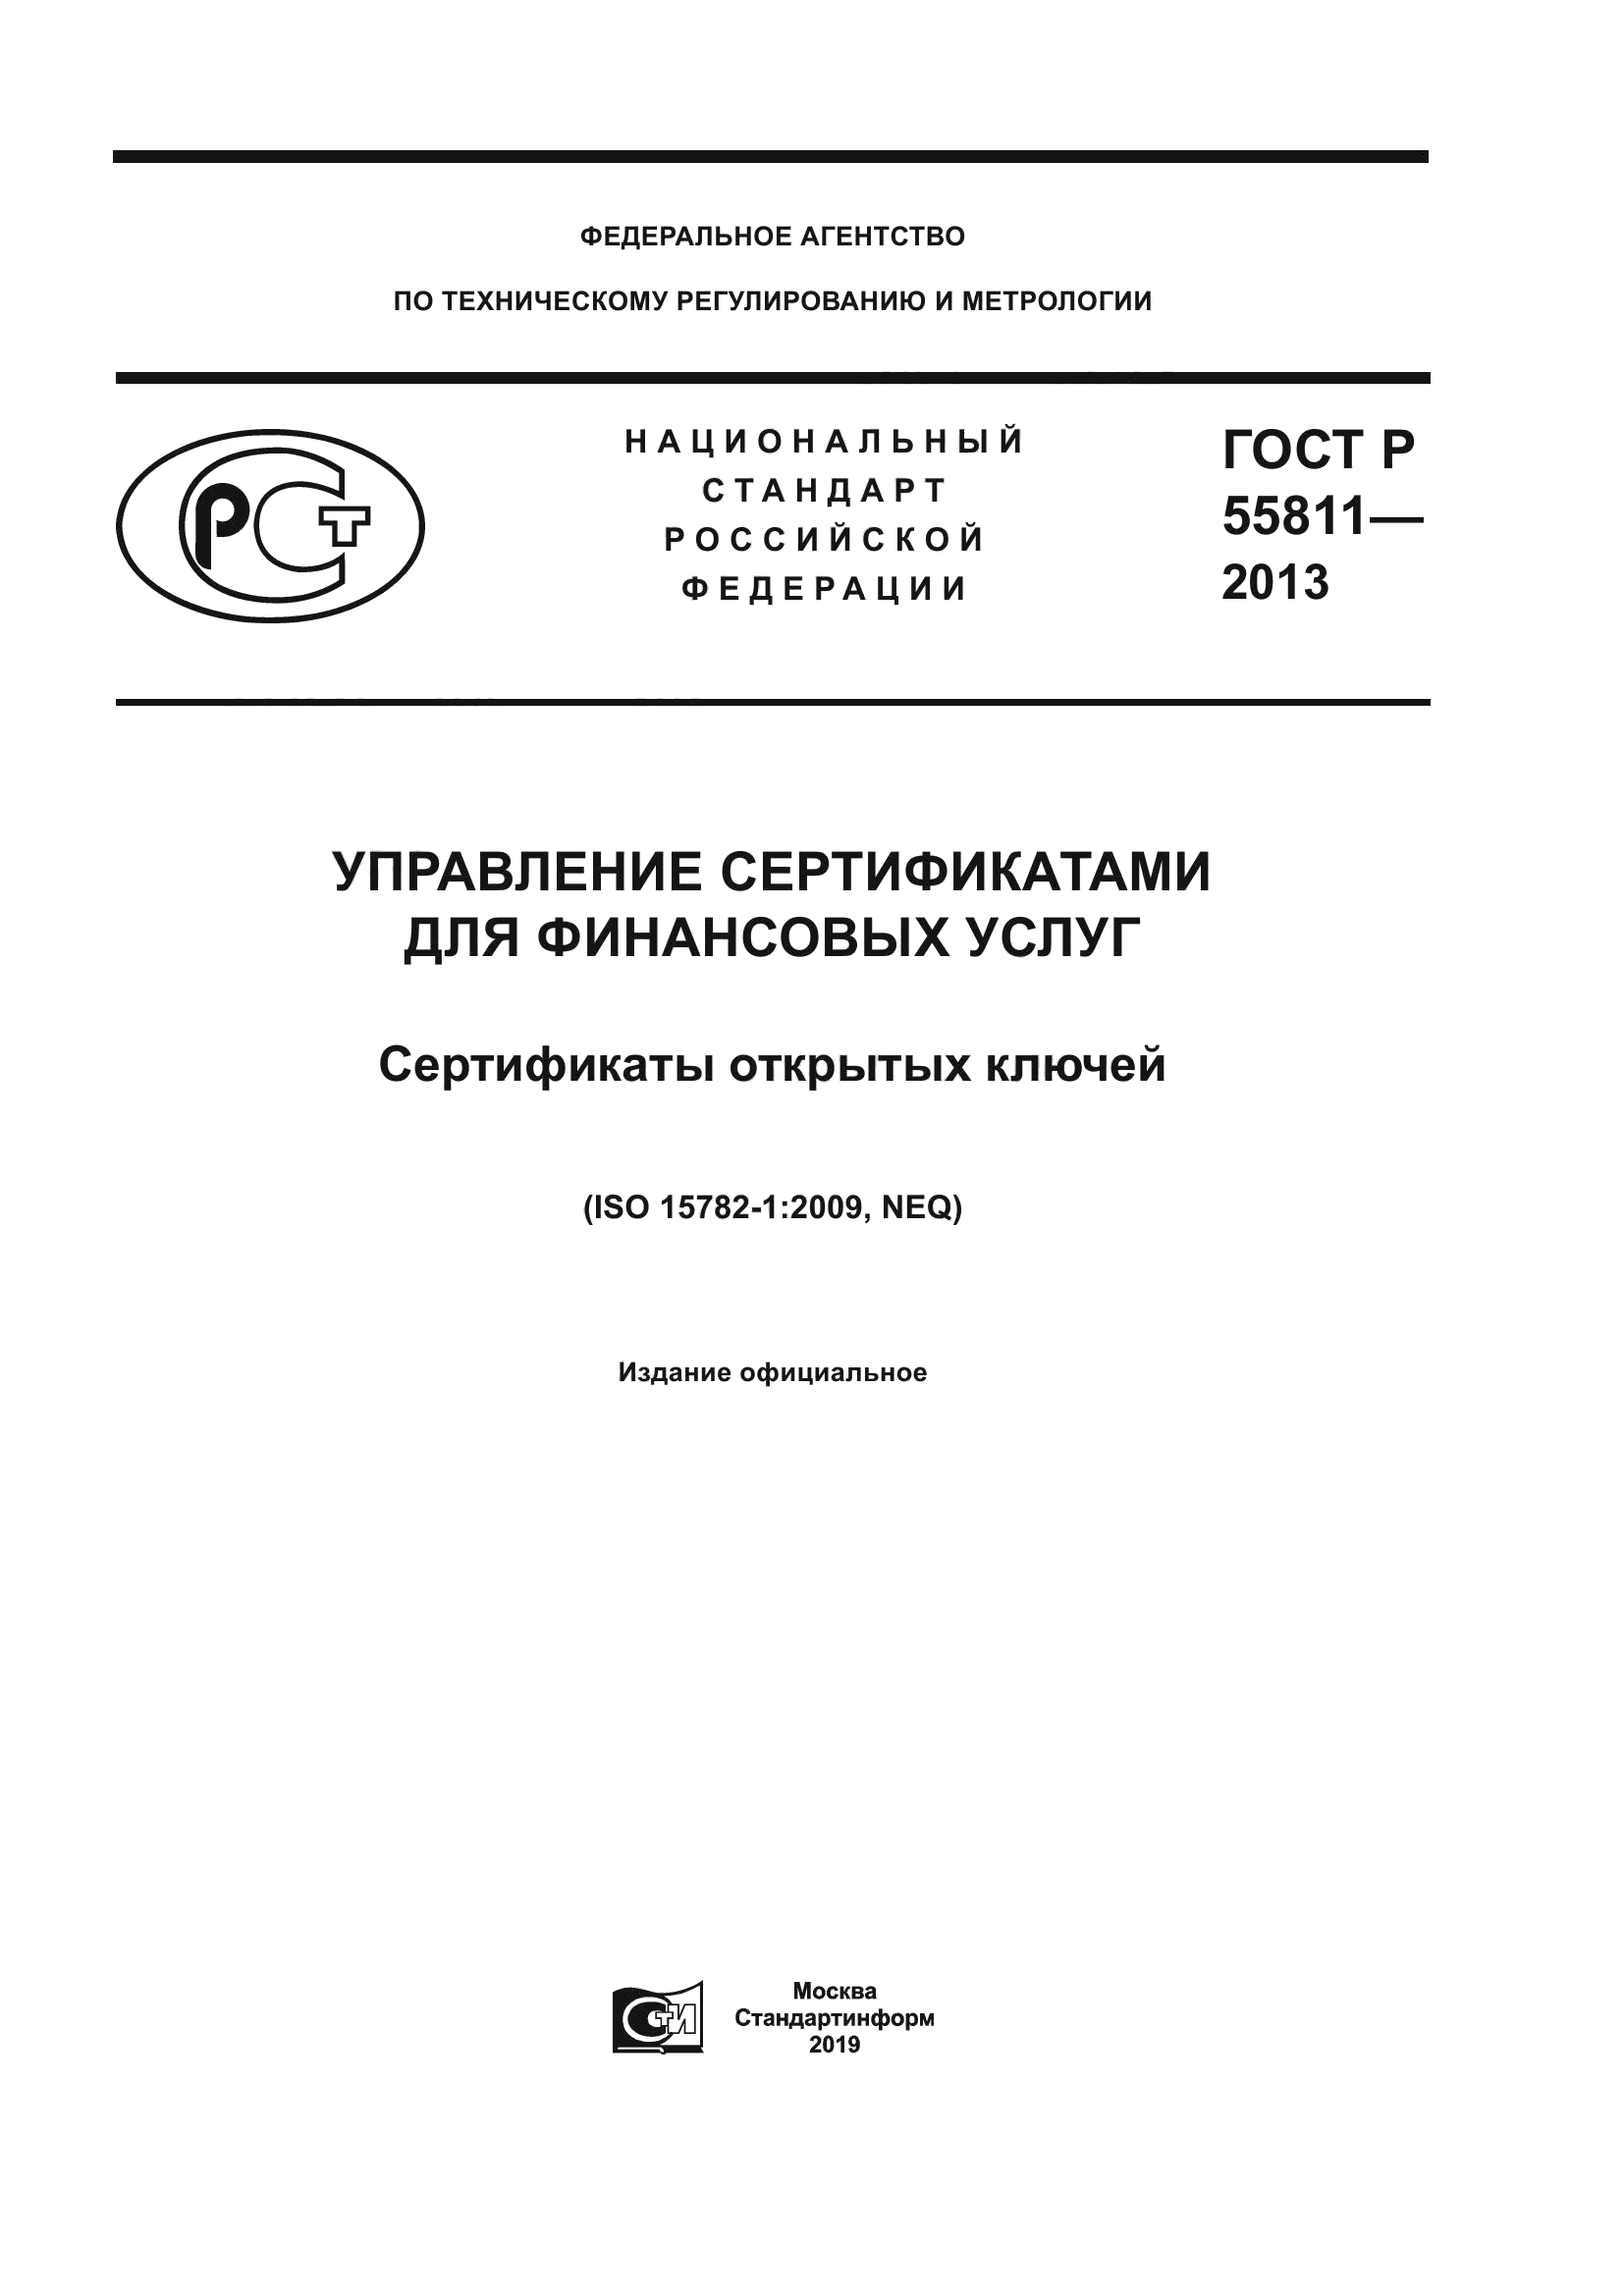 ГОСТ Р 55811-2013